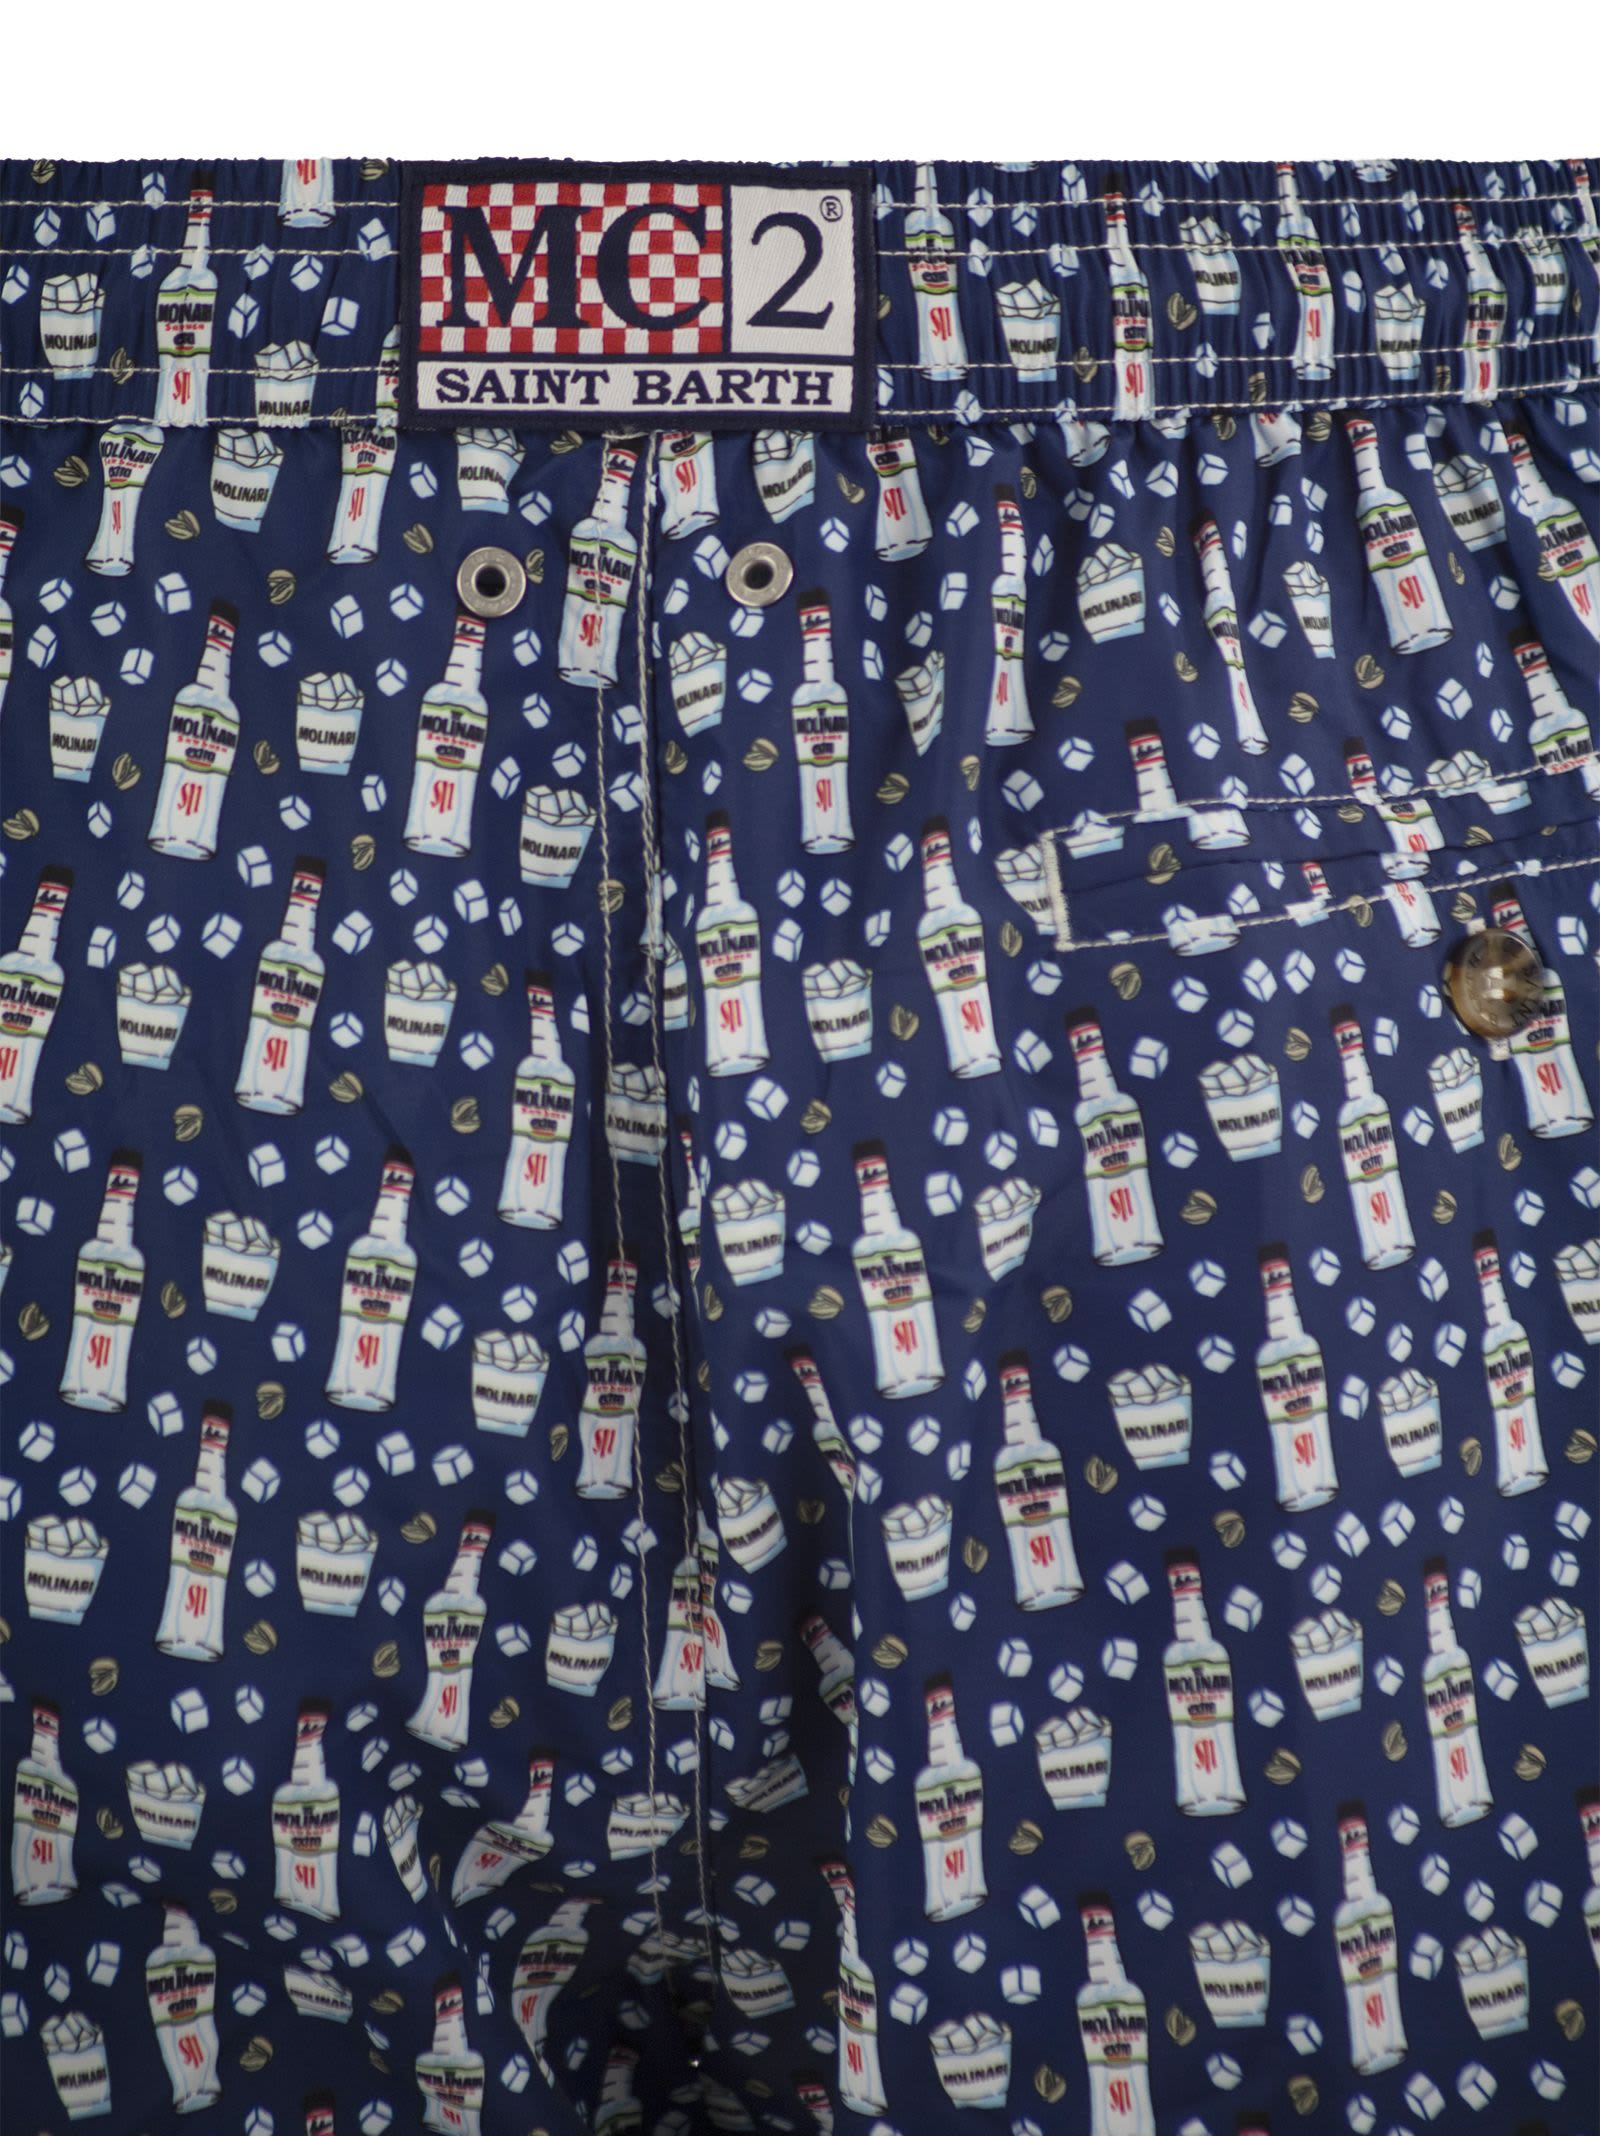 Shop Mc2 Saint Barth Lightweight Fabric Swim Boxer Shorts With Print In Blue